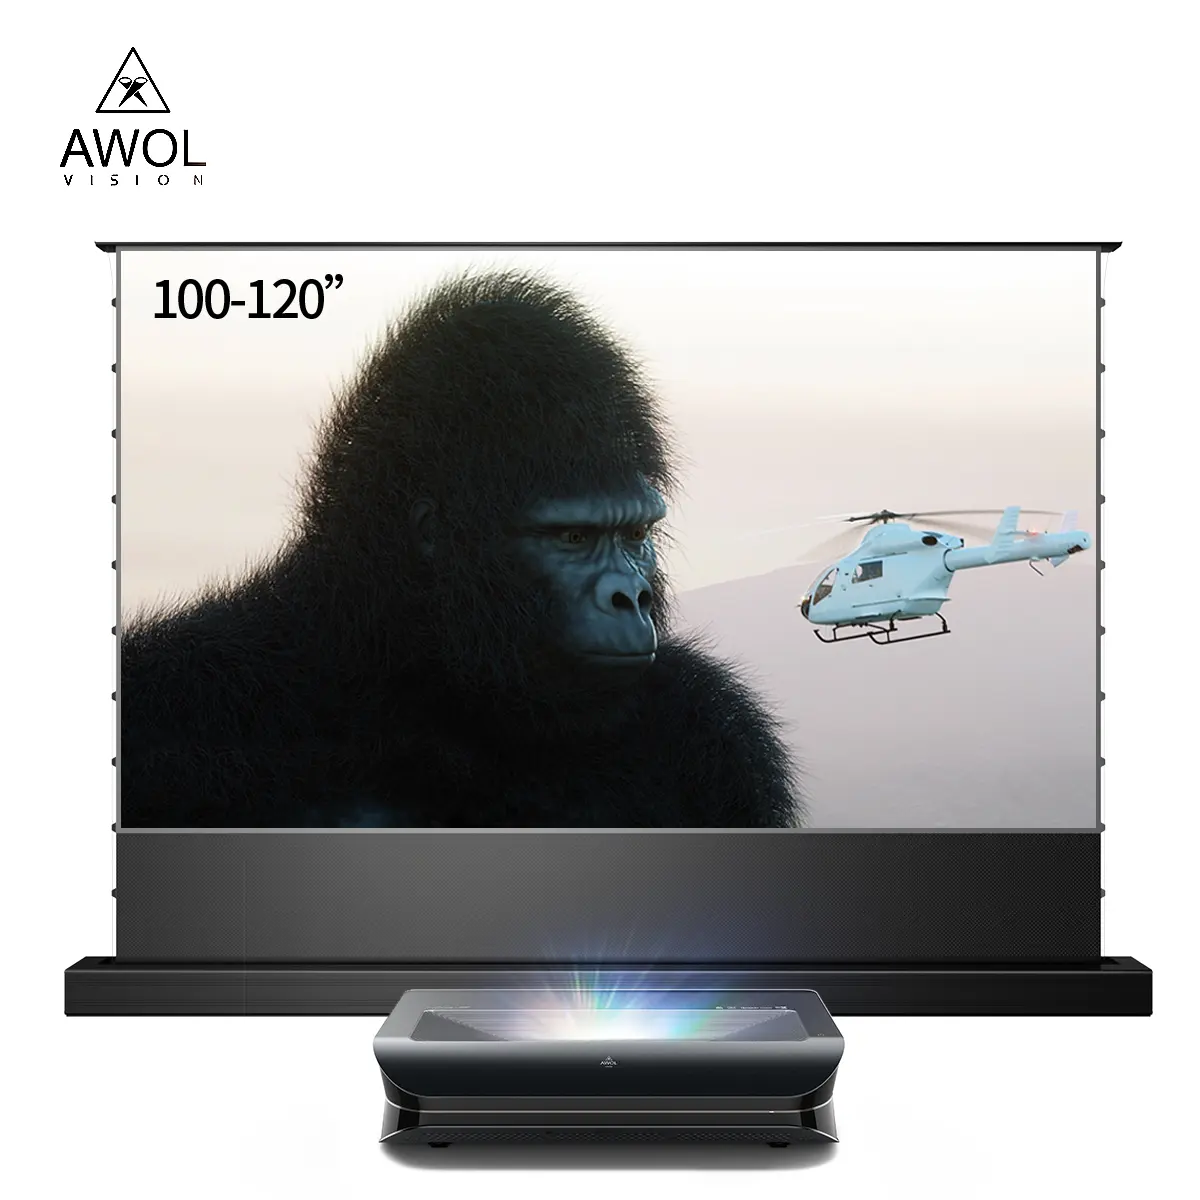 AWOL VISION LTV 3000 pro 150 "ust 3D android proyektor uhd 4k video bioskop home theater ultra pendek melempar proyektor laser